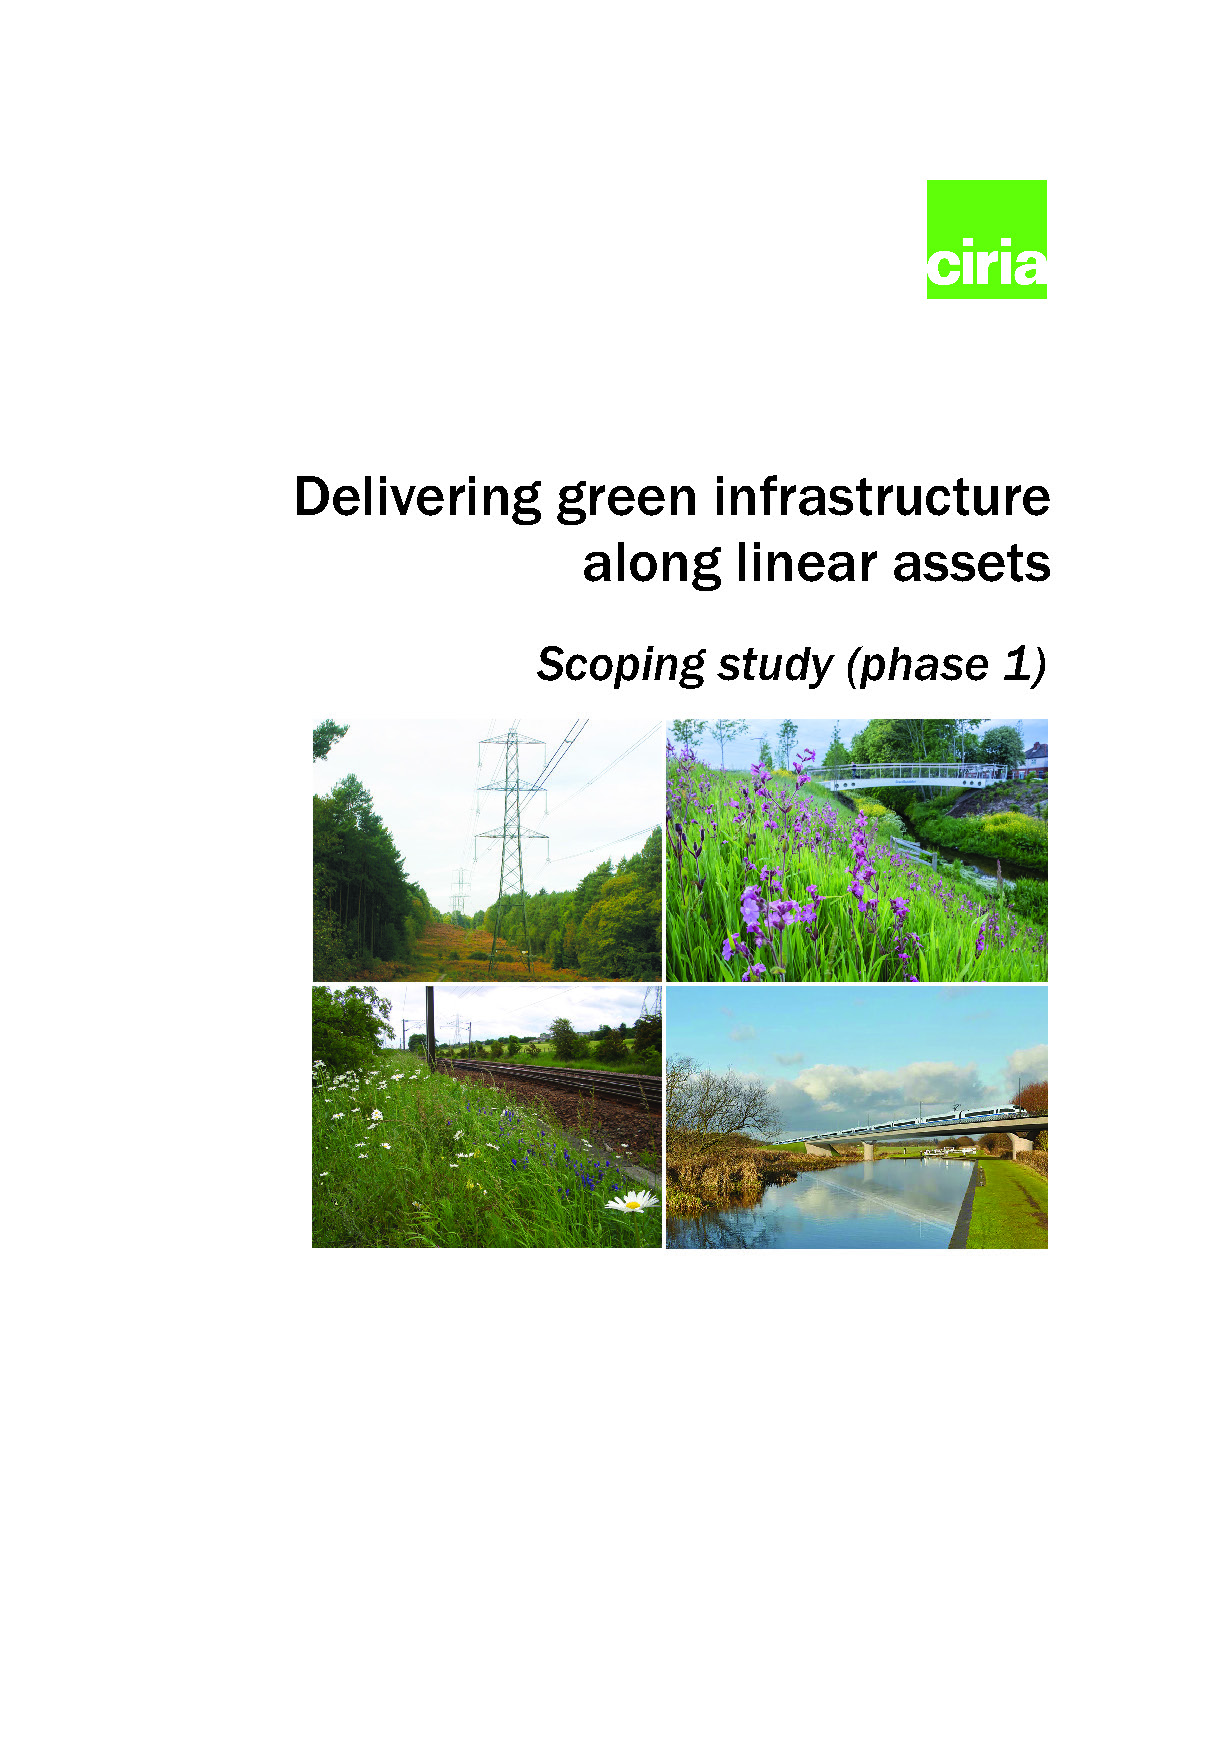 Delivering green infrastructure along linear assets...